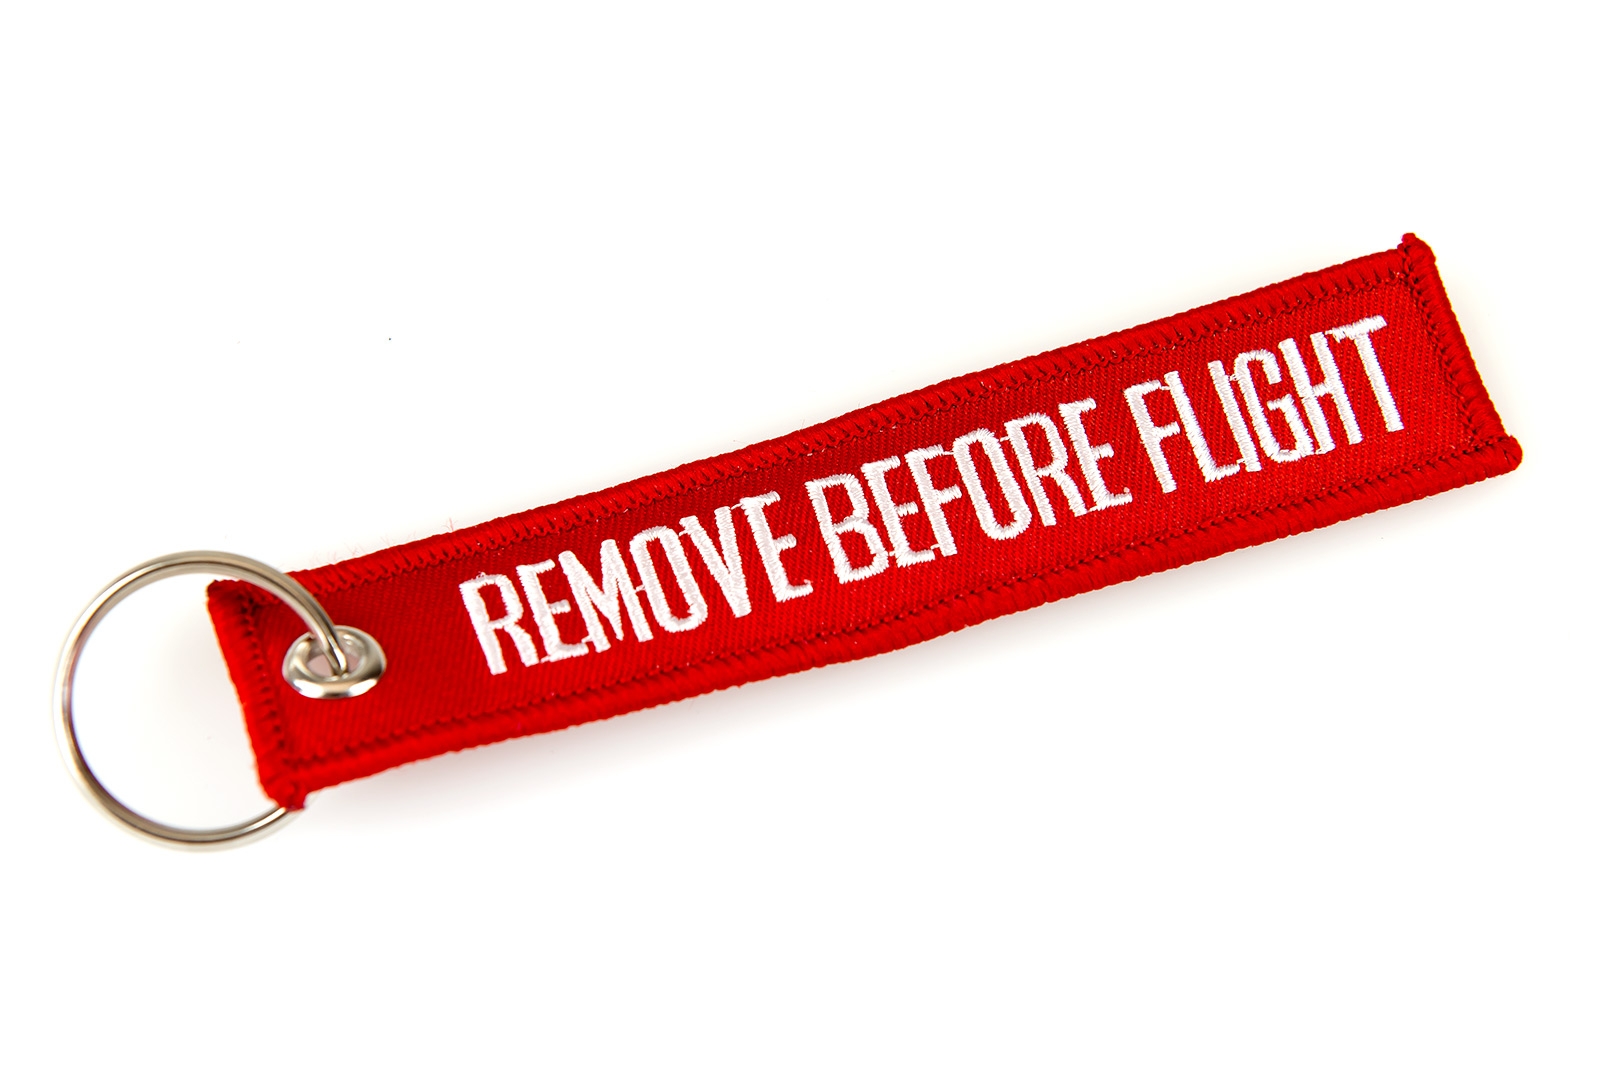 Remove Before Flight Tag